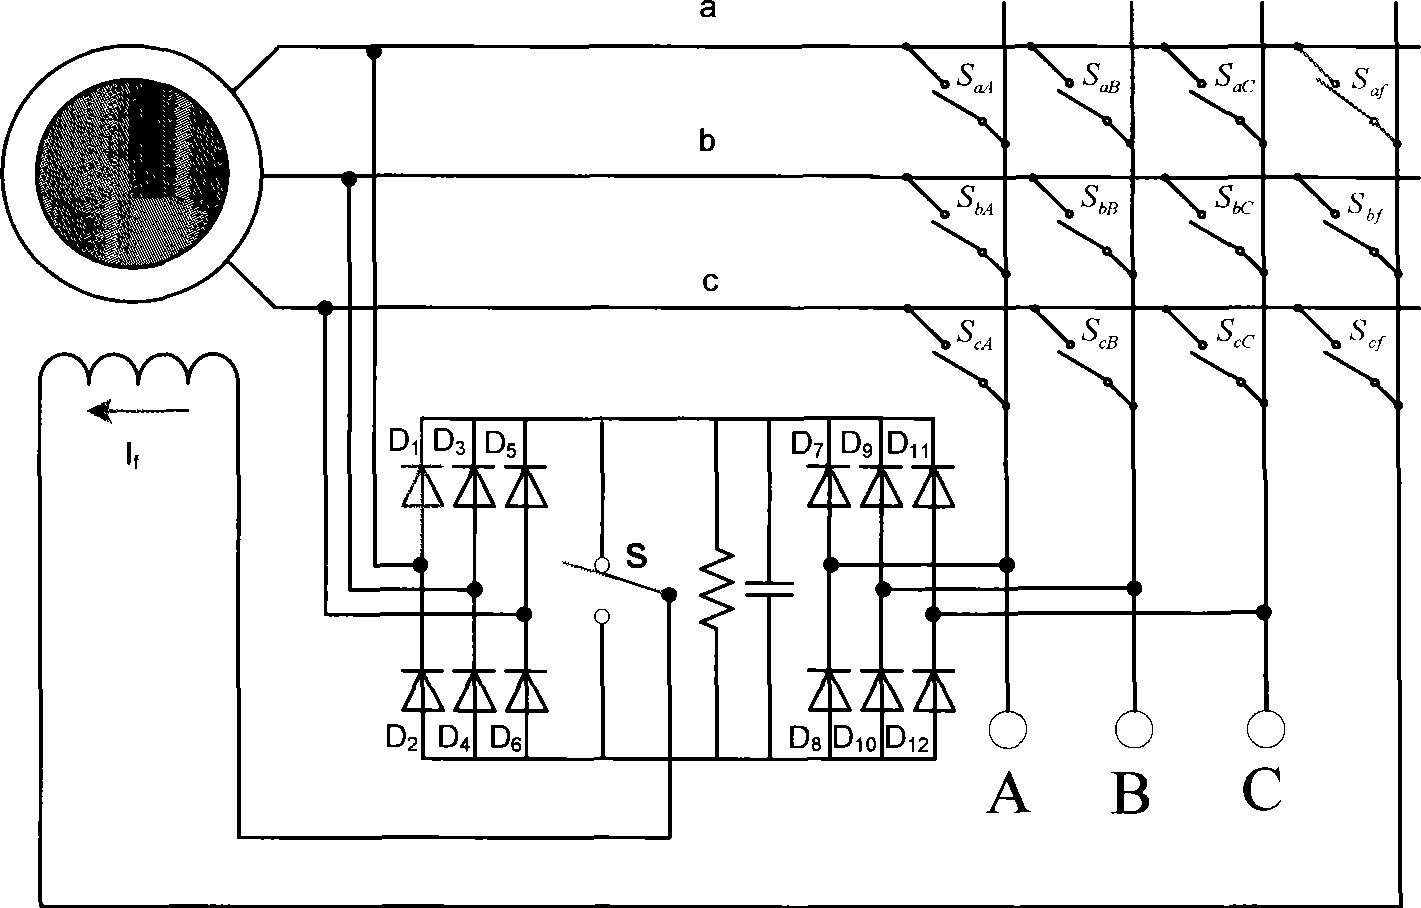 Three phase four bridge arm matrix type converter having excitation function